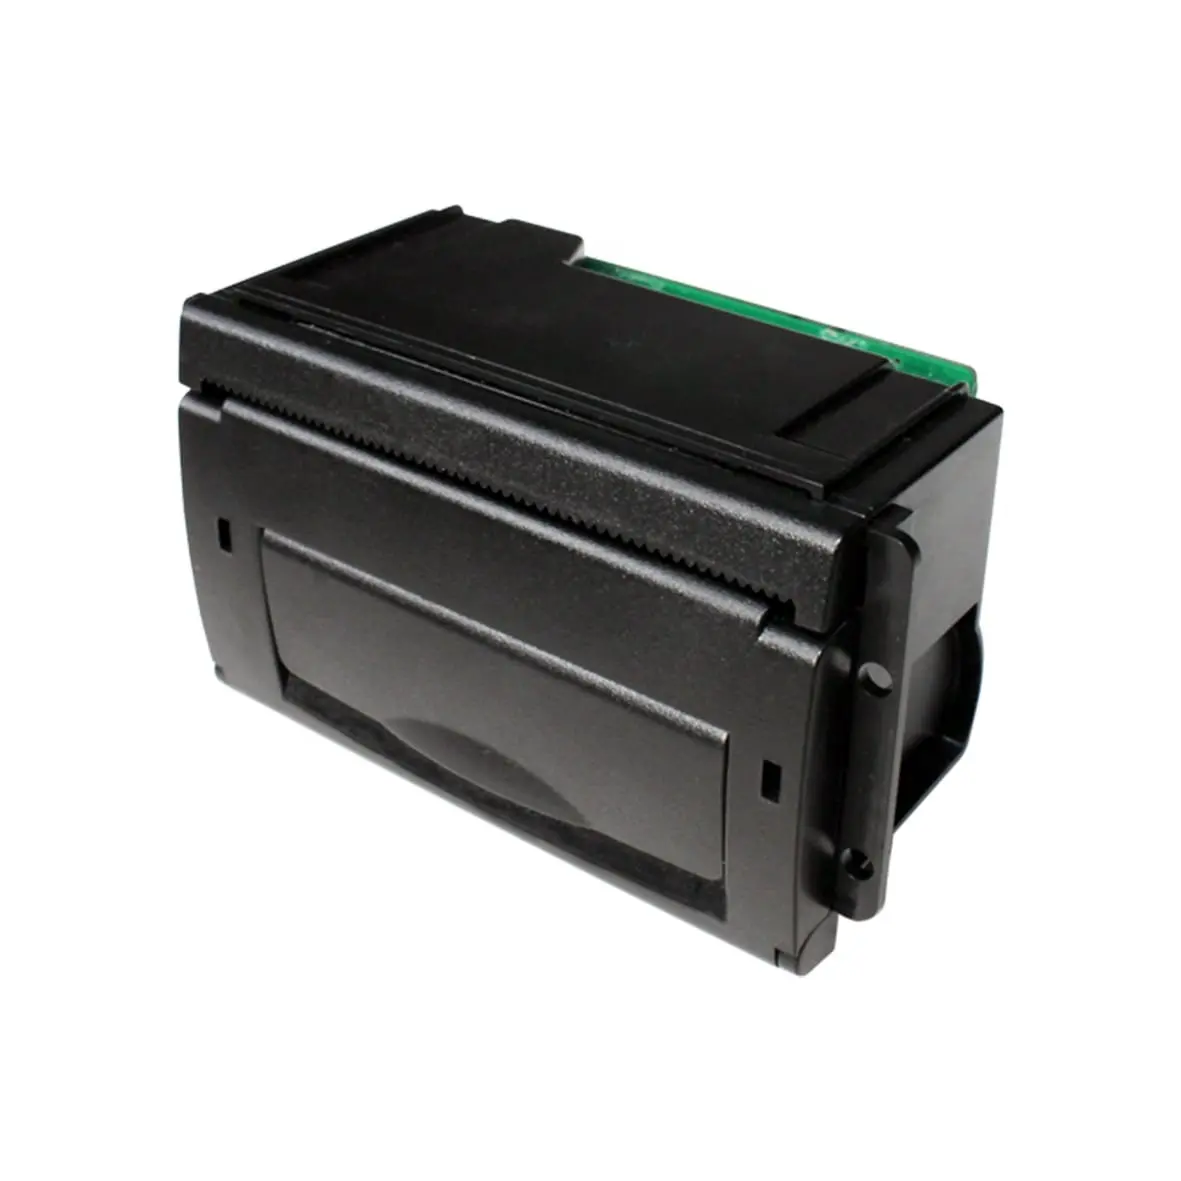 Micros Thermal Printer Cashino CSN-A3 2 Inch Micro Panel Embedded Thermal Printer 58mm Impresora Trmicaimpresoras Trmicas